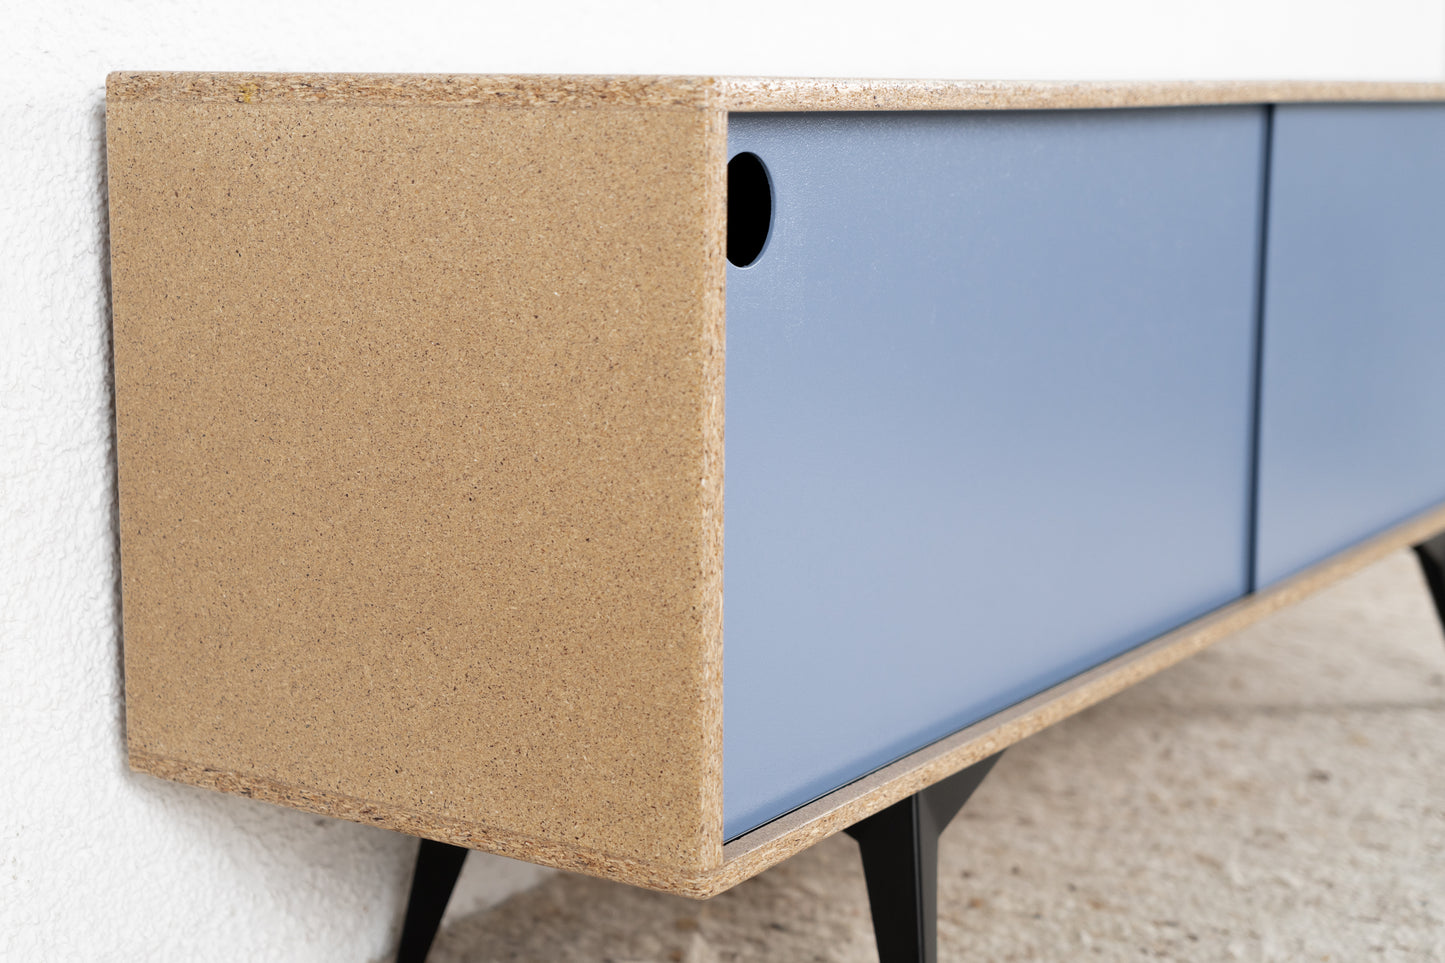 R&F Sideboard Recycling Kommode Tv Board Schiebetüren Mid Century Space age Design